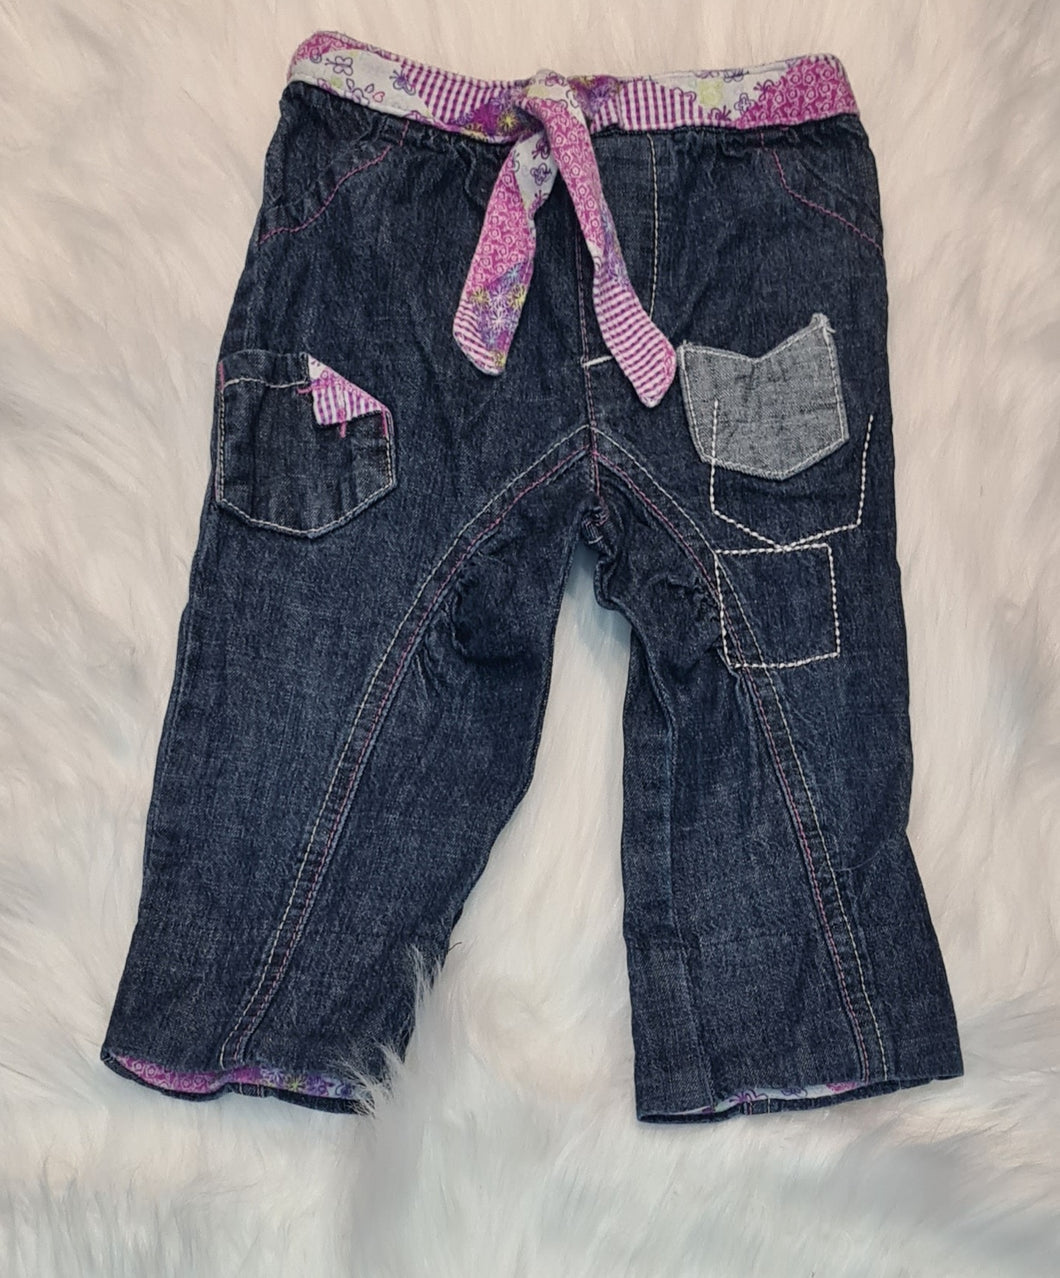 Girls 3-6 Months - Navy Jeans with Purple Belt